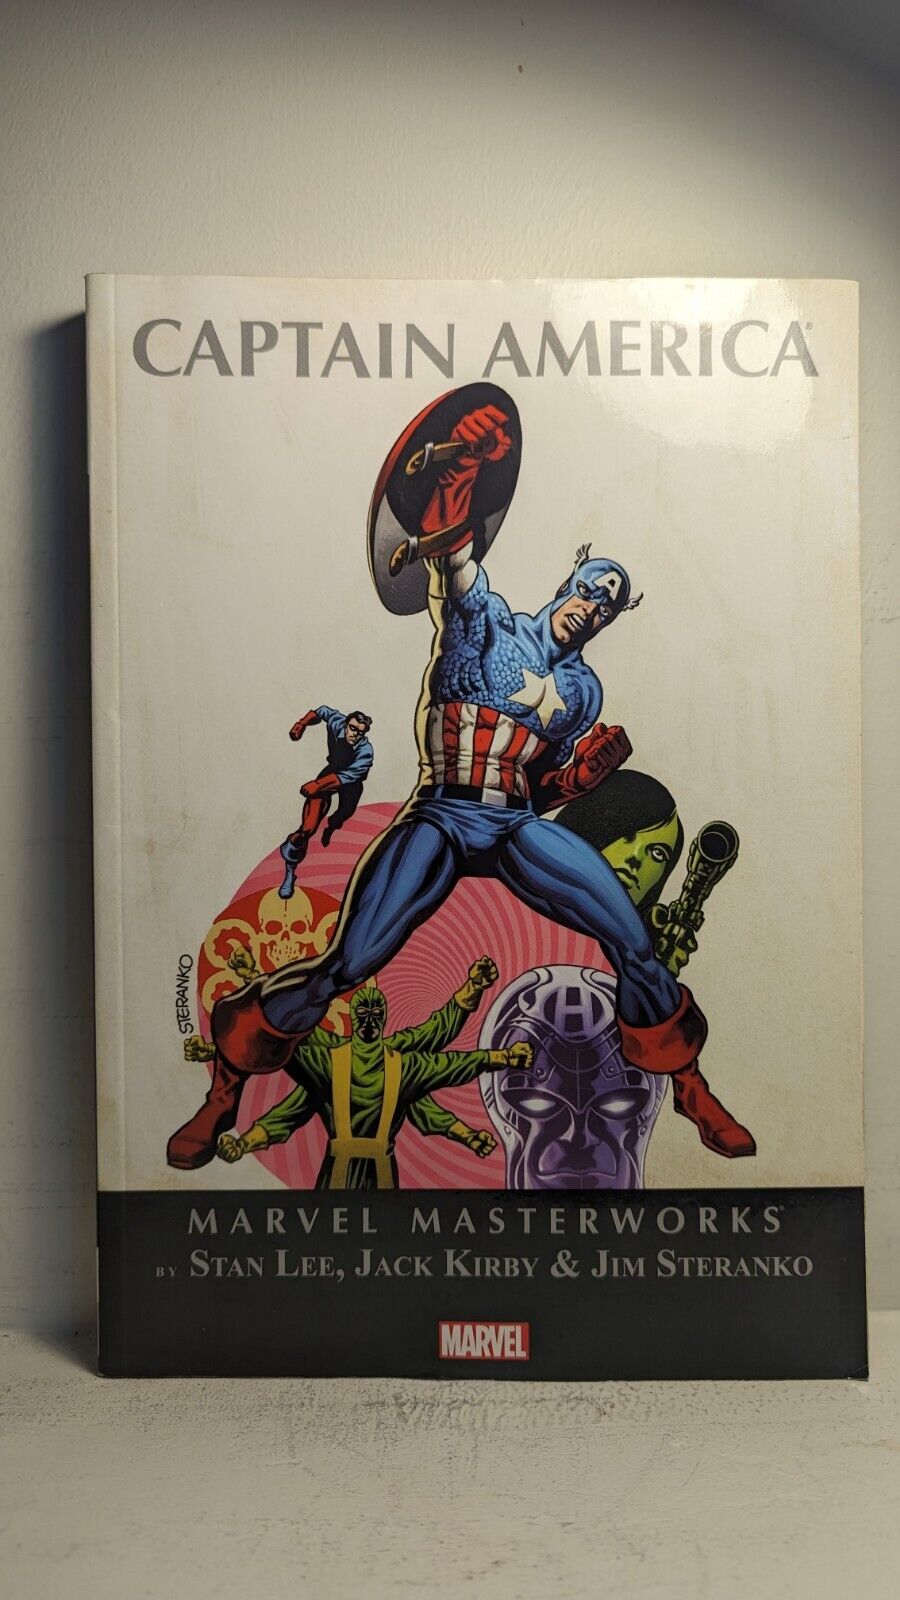 Marvel Masterworks: Captain America #3 PAPERBACK VERY GOOD CONDITION